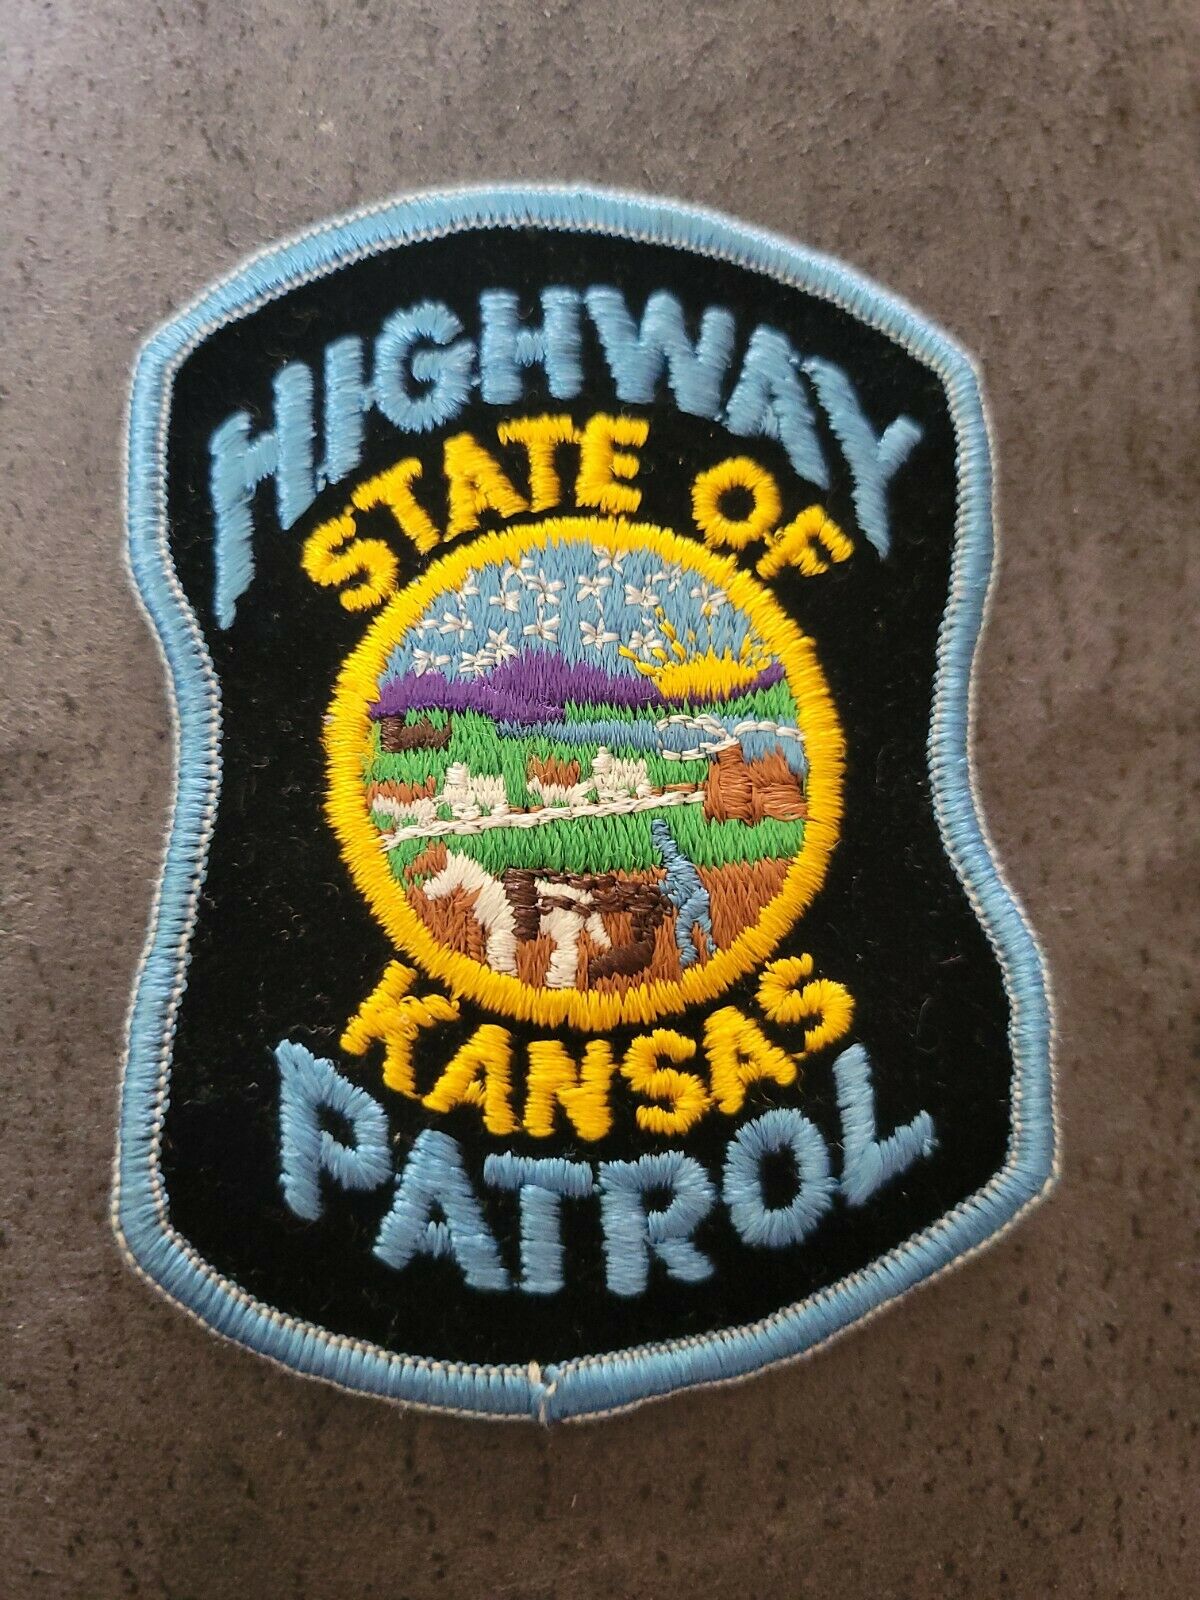 Kansas Ks Police State Highway Patrol  Patch New Old Stock Felt Obsolete